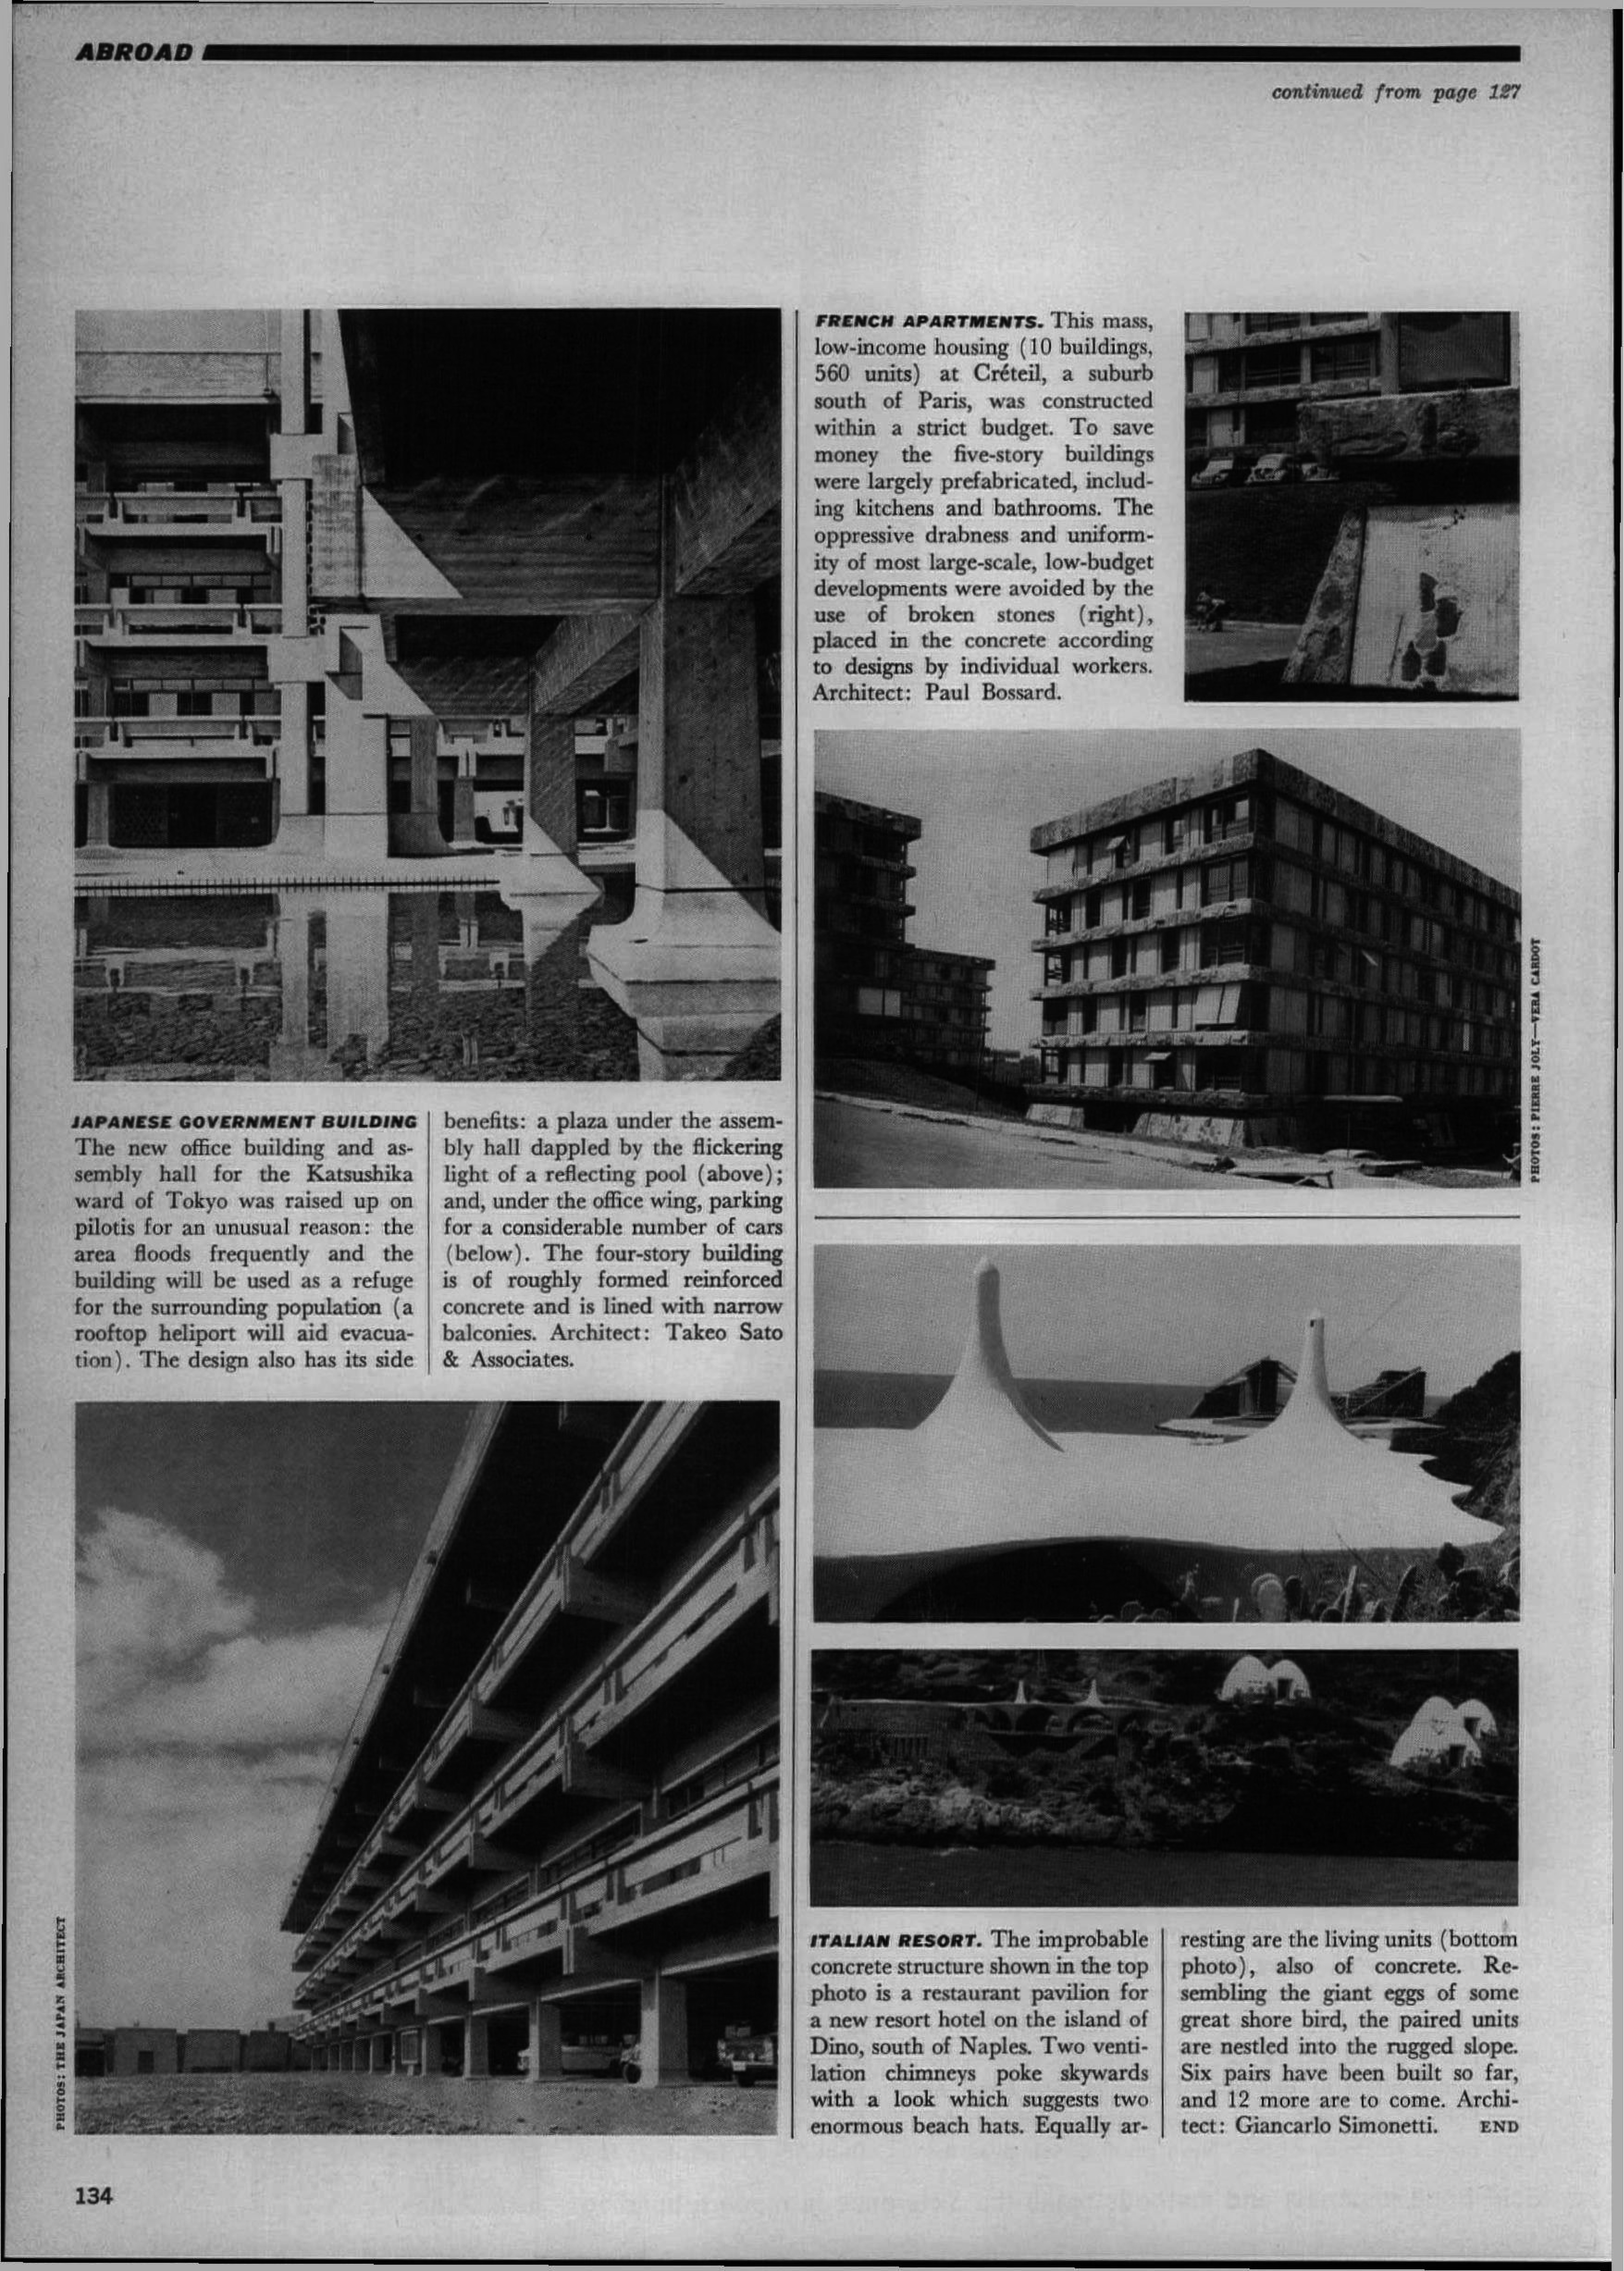 1963. “Italian resort (Restaurant pavillion, Giancarlo Simonetti, Island of Dino)”, Architectural Forum, 120, no. 8 (August): 134.